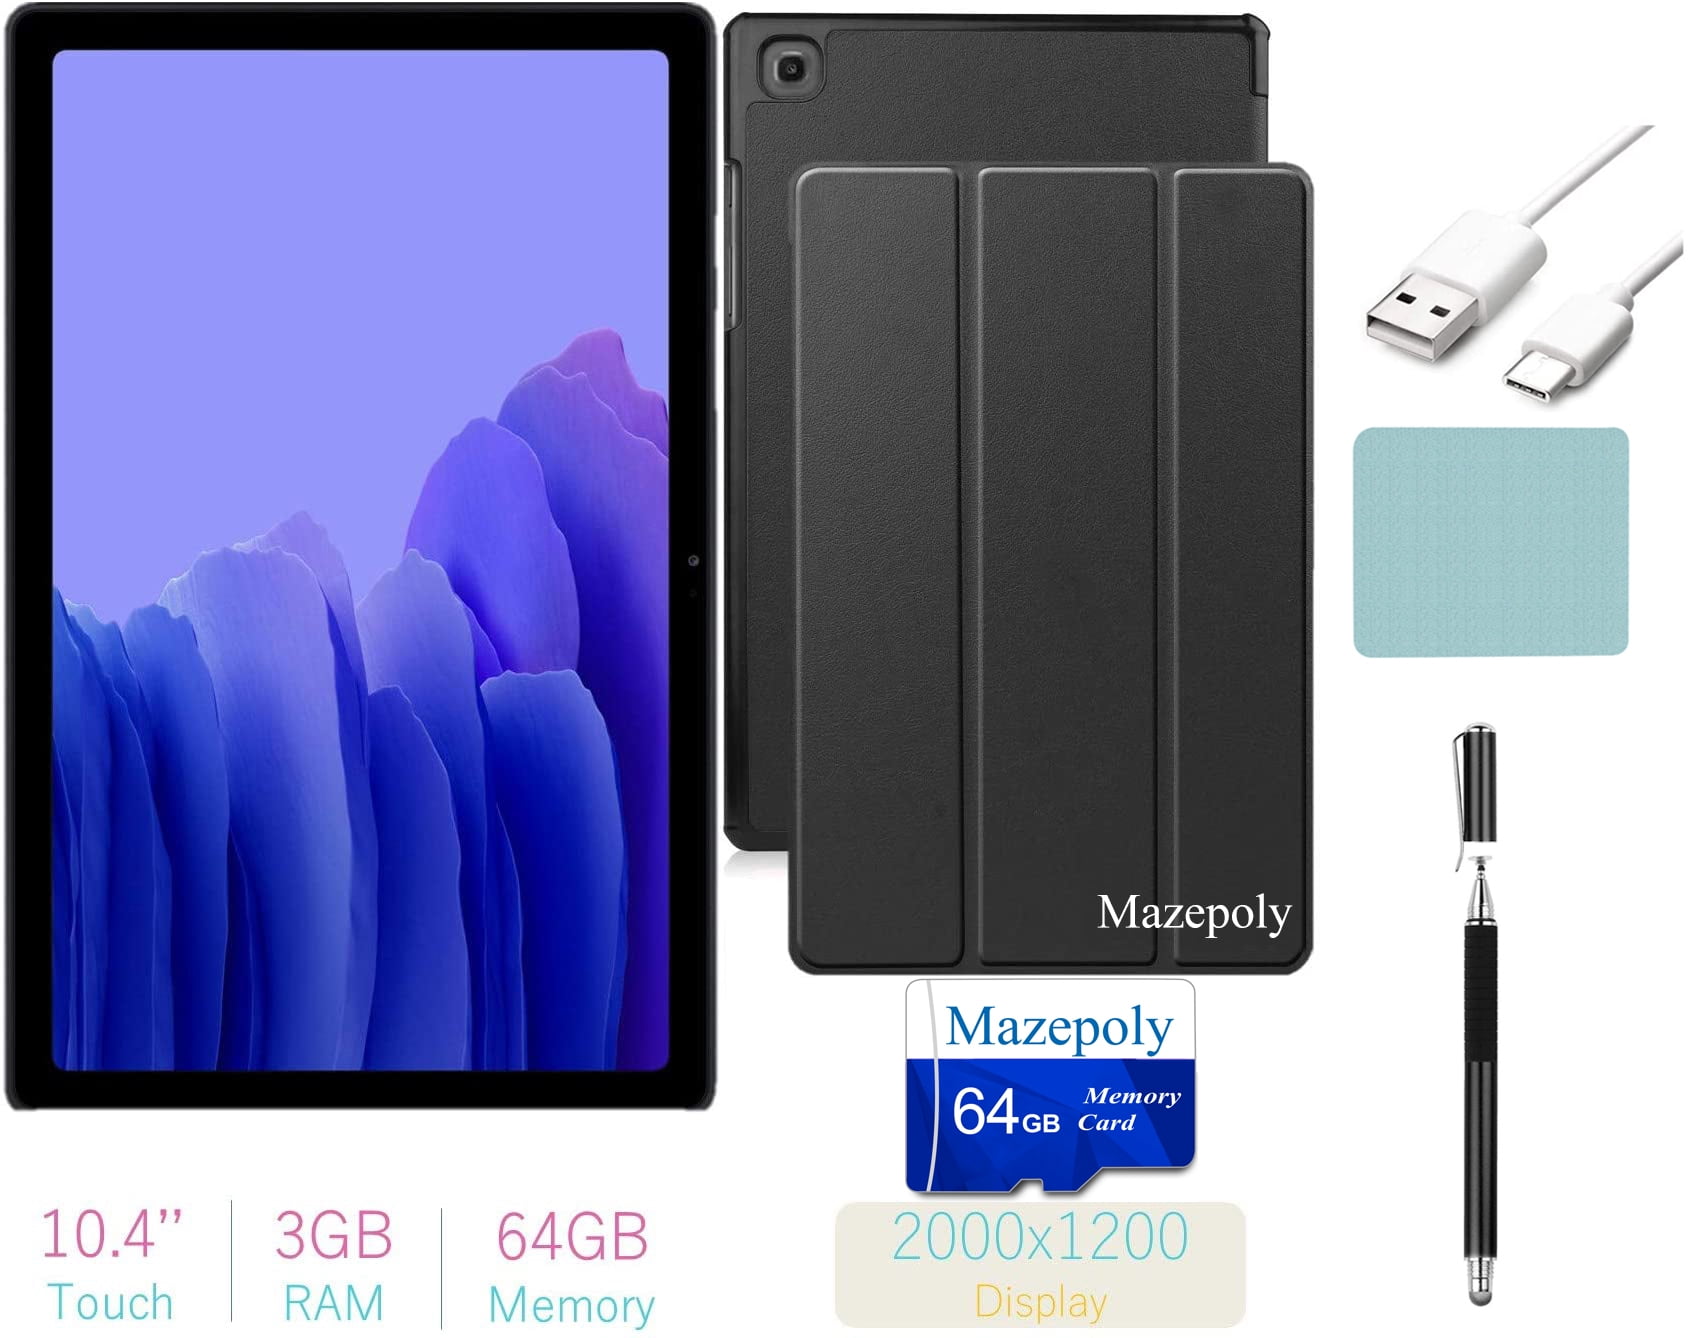 2021 Samsung Galaxy Tab A7 (2000x1200) TFT Display Wi-Fi Tablet Bundle, Qualcomm Snapdragon 662, 3GB RAM, Bluetooth, Dolby Atmos Audio, Android 10 OS w/Mazepoly Accessories (64GB, Gray) - Walmart.com